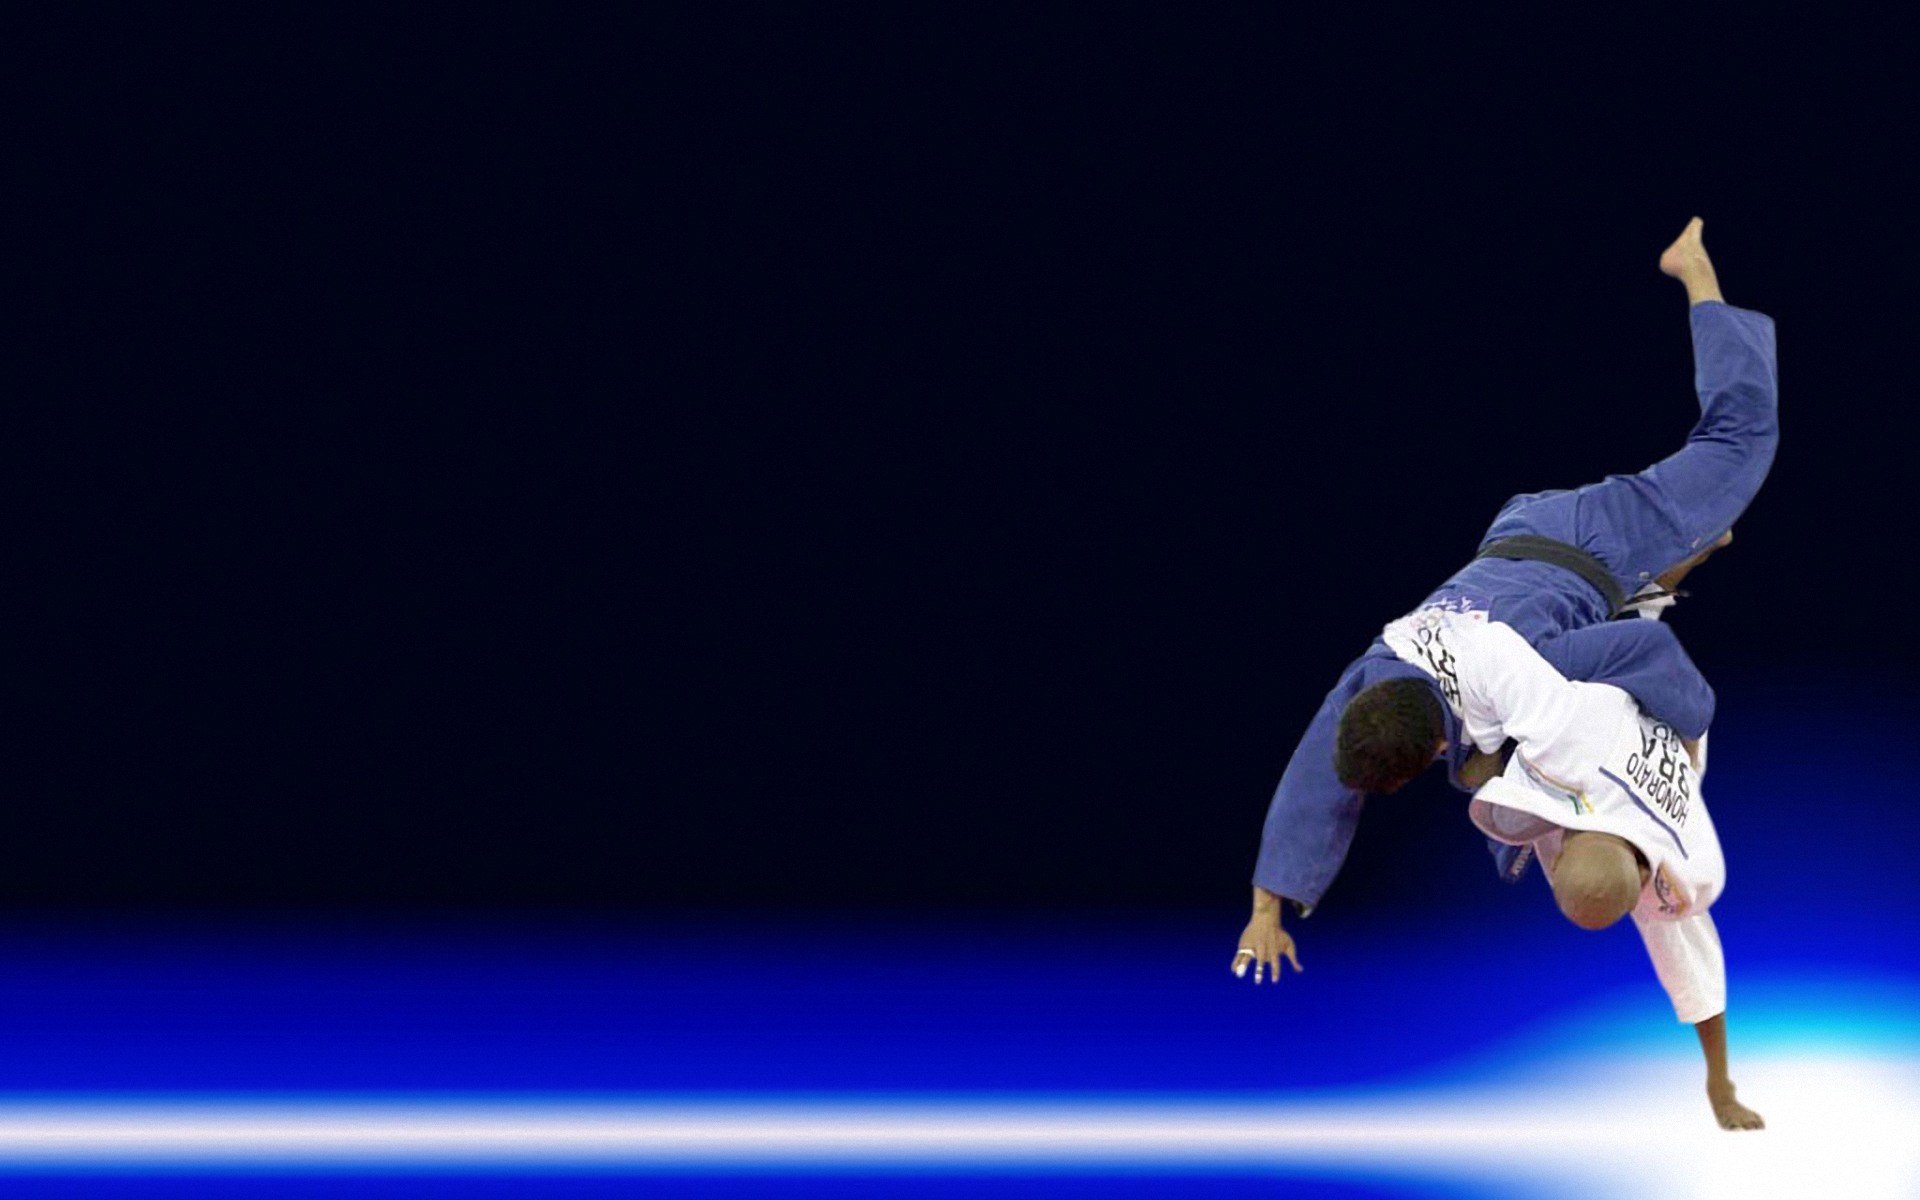 Judo Confrontation Wallpaper